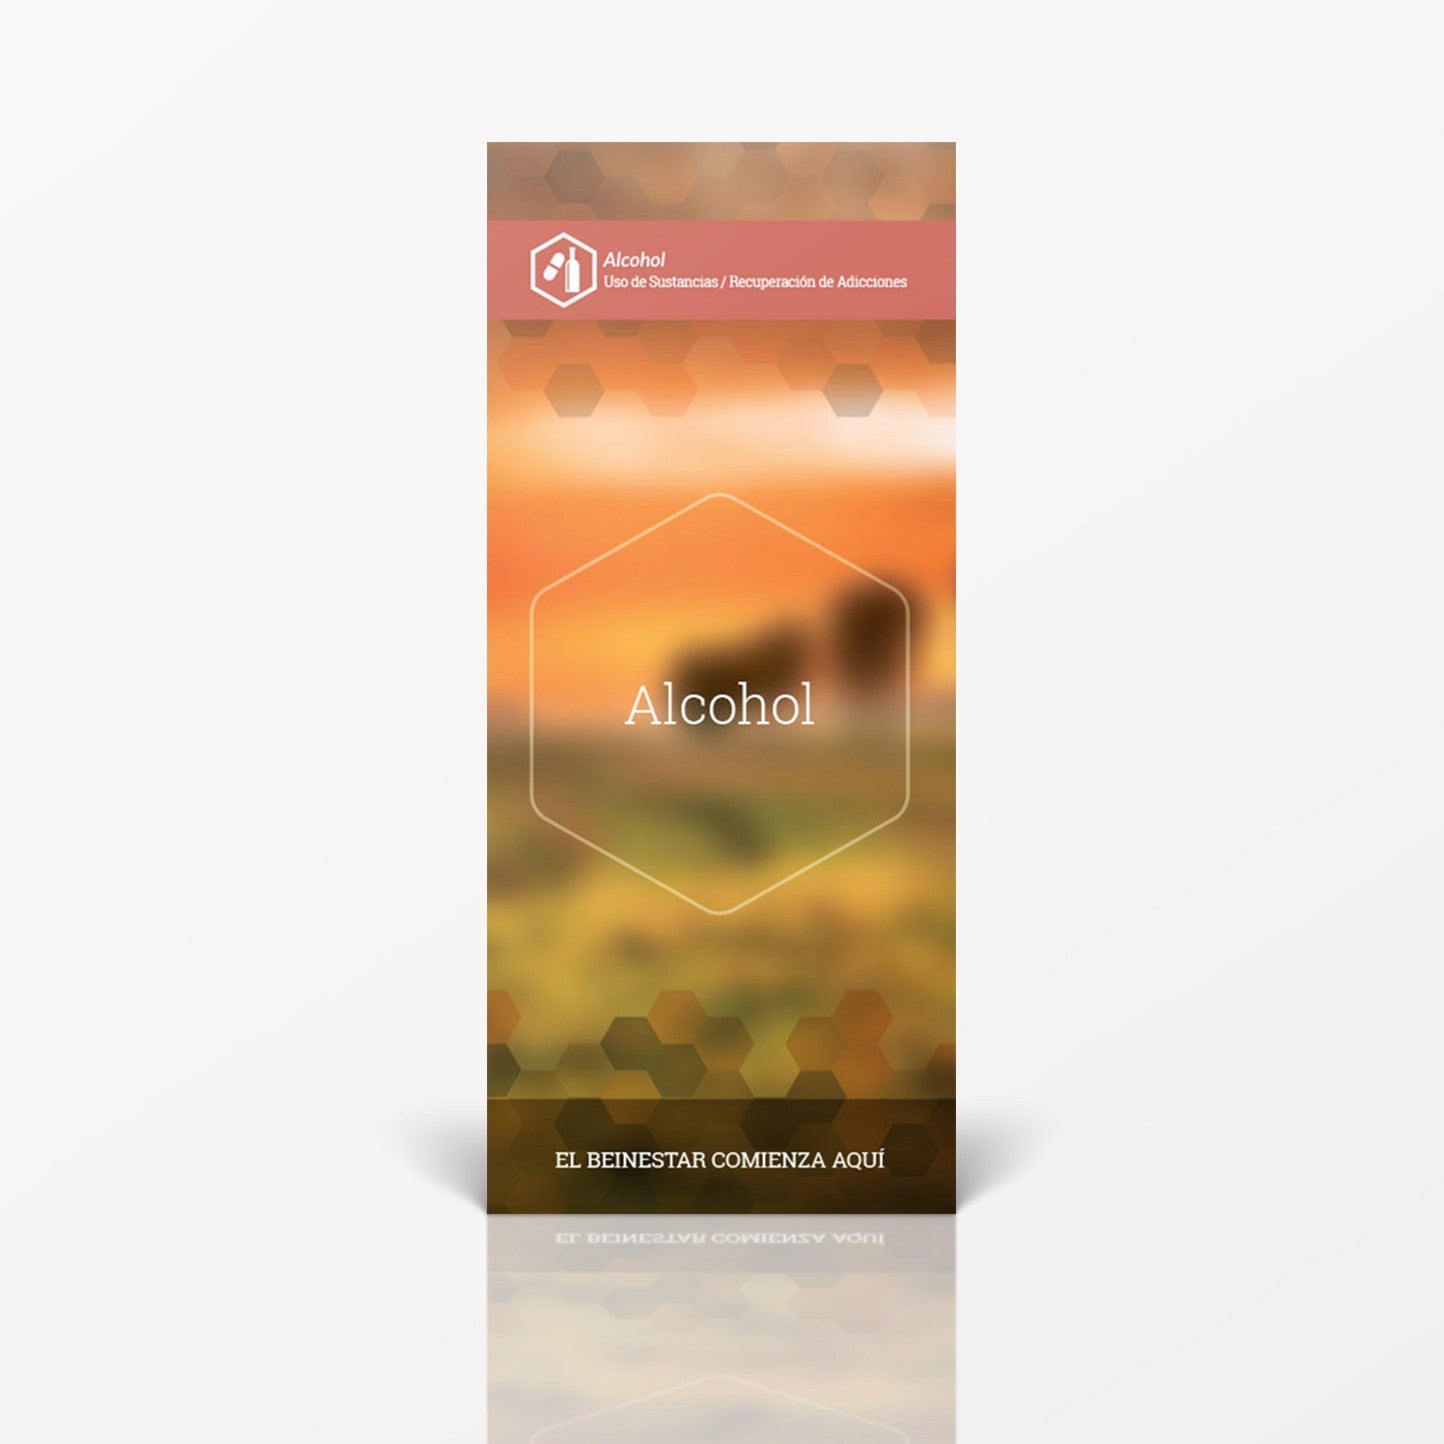 Spanish pamphlet on Alcohol